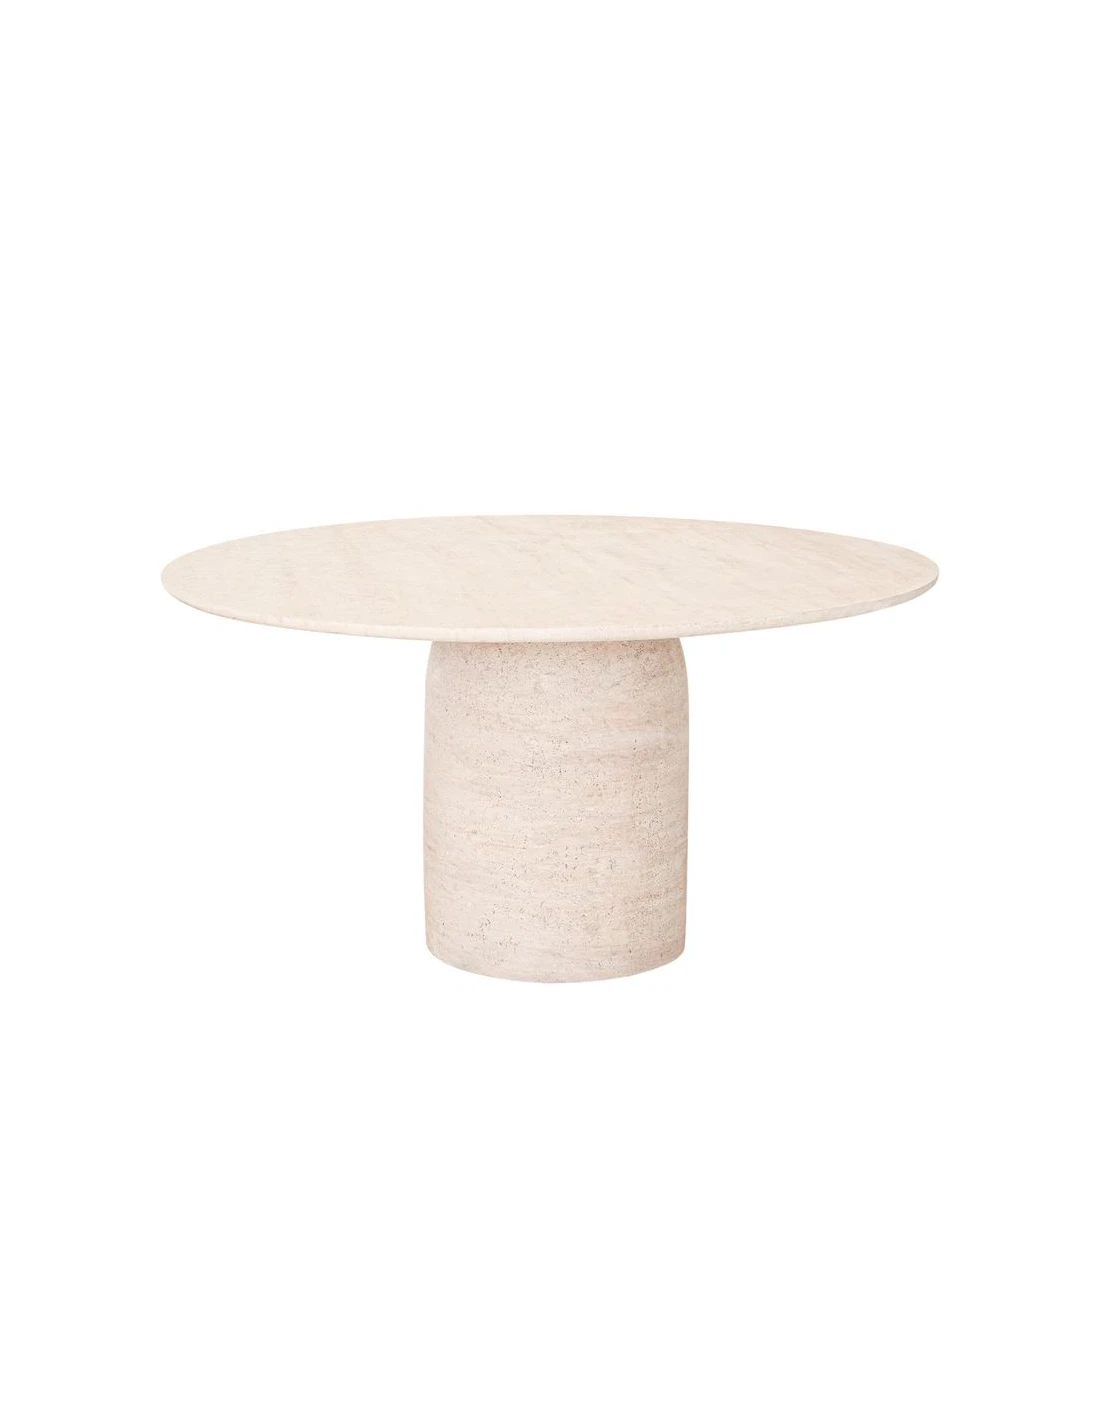 Dining table Triana round 120cm stone